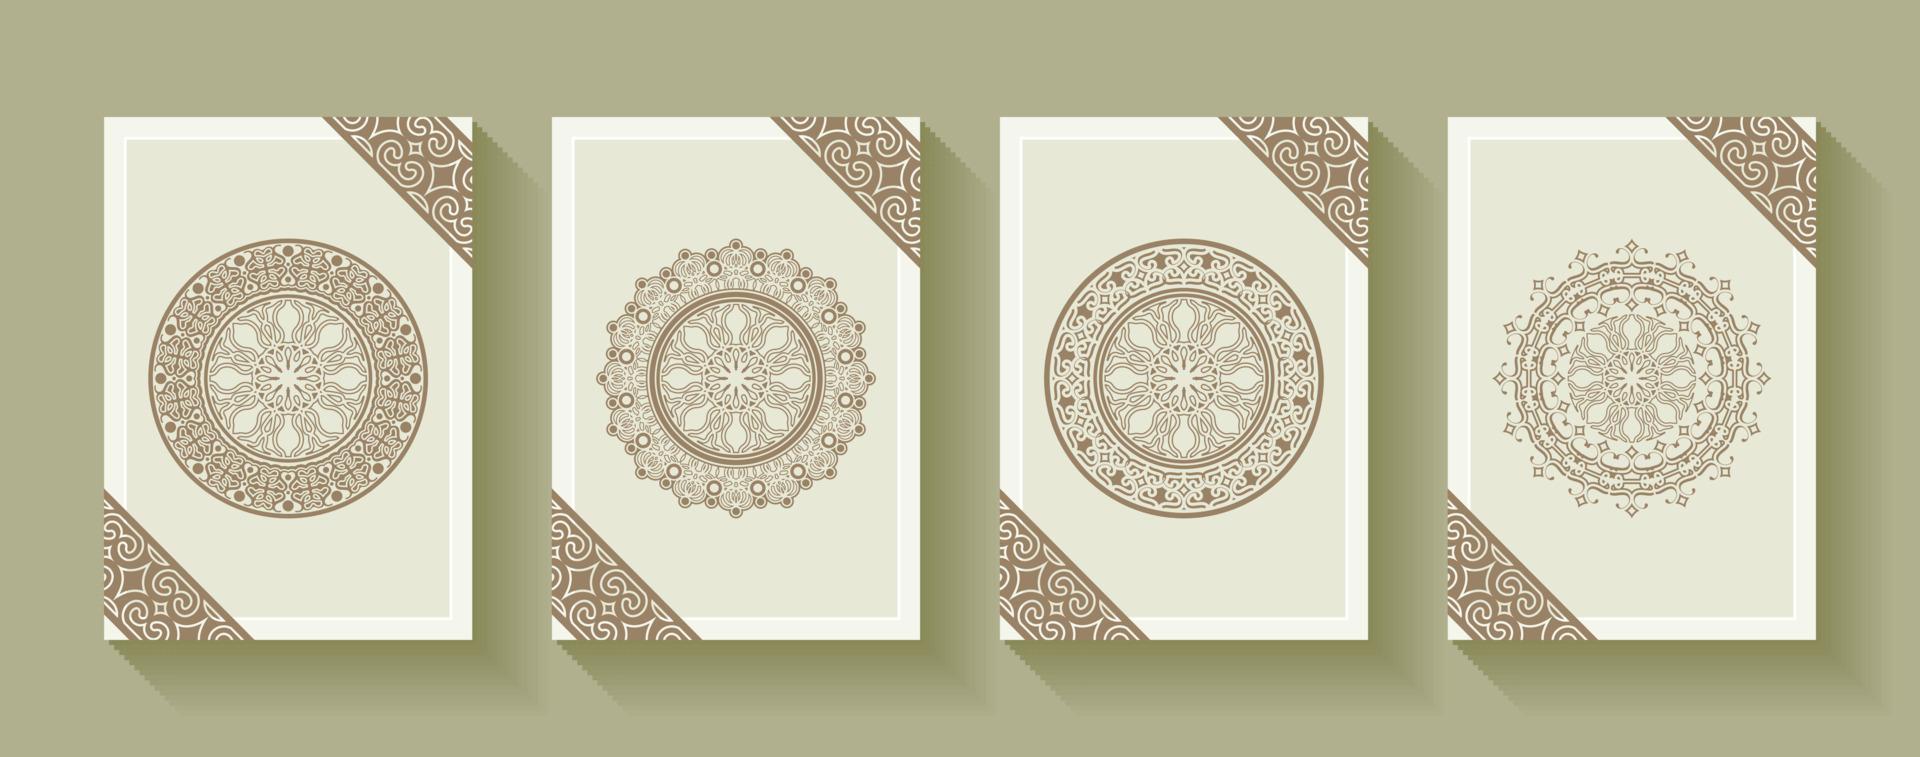 Vintage Mandala-Grußkarte mit Ornament-Muster-Design vektor